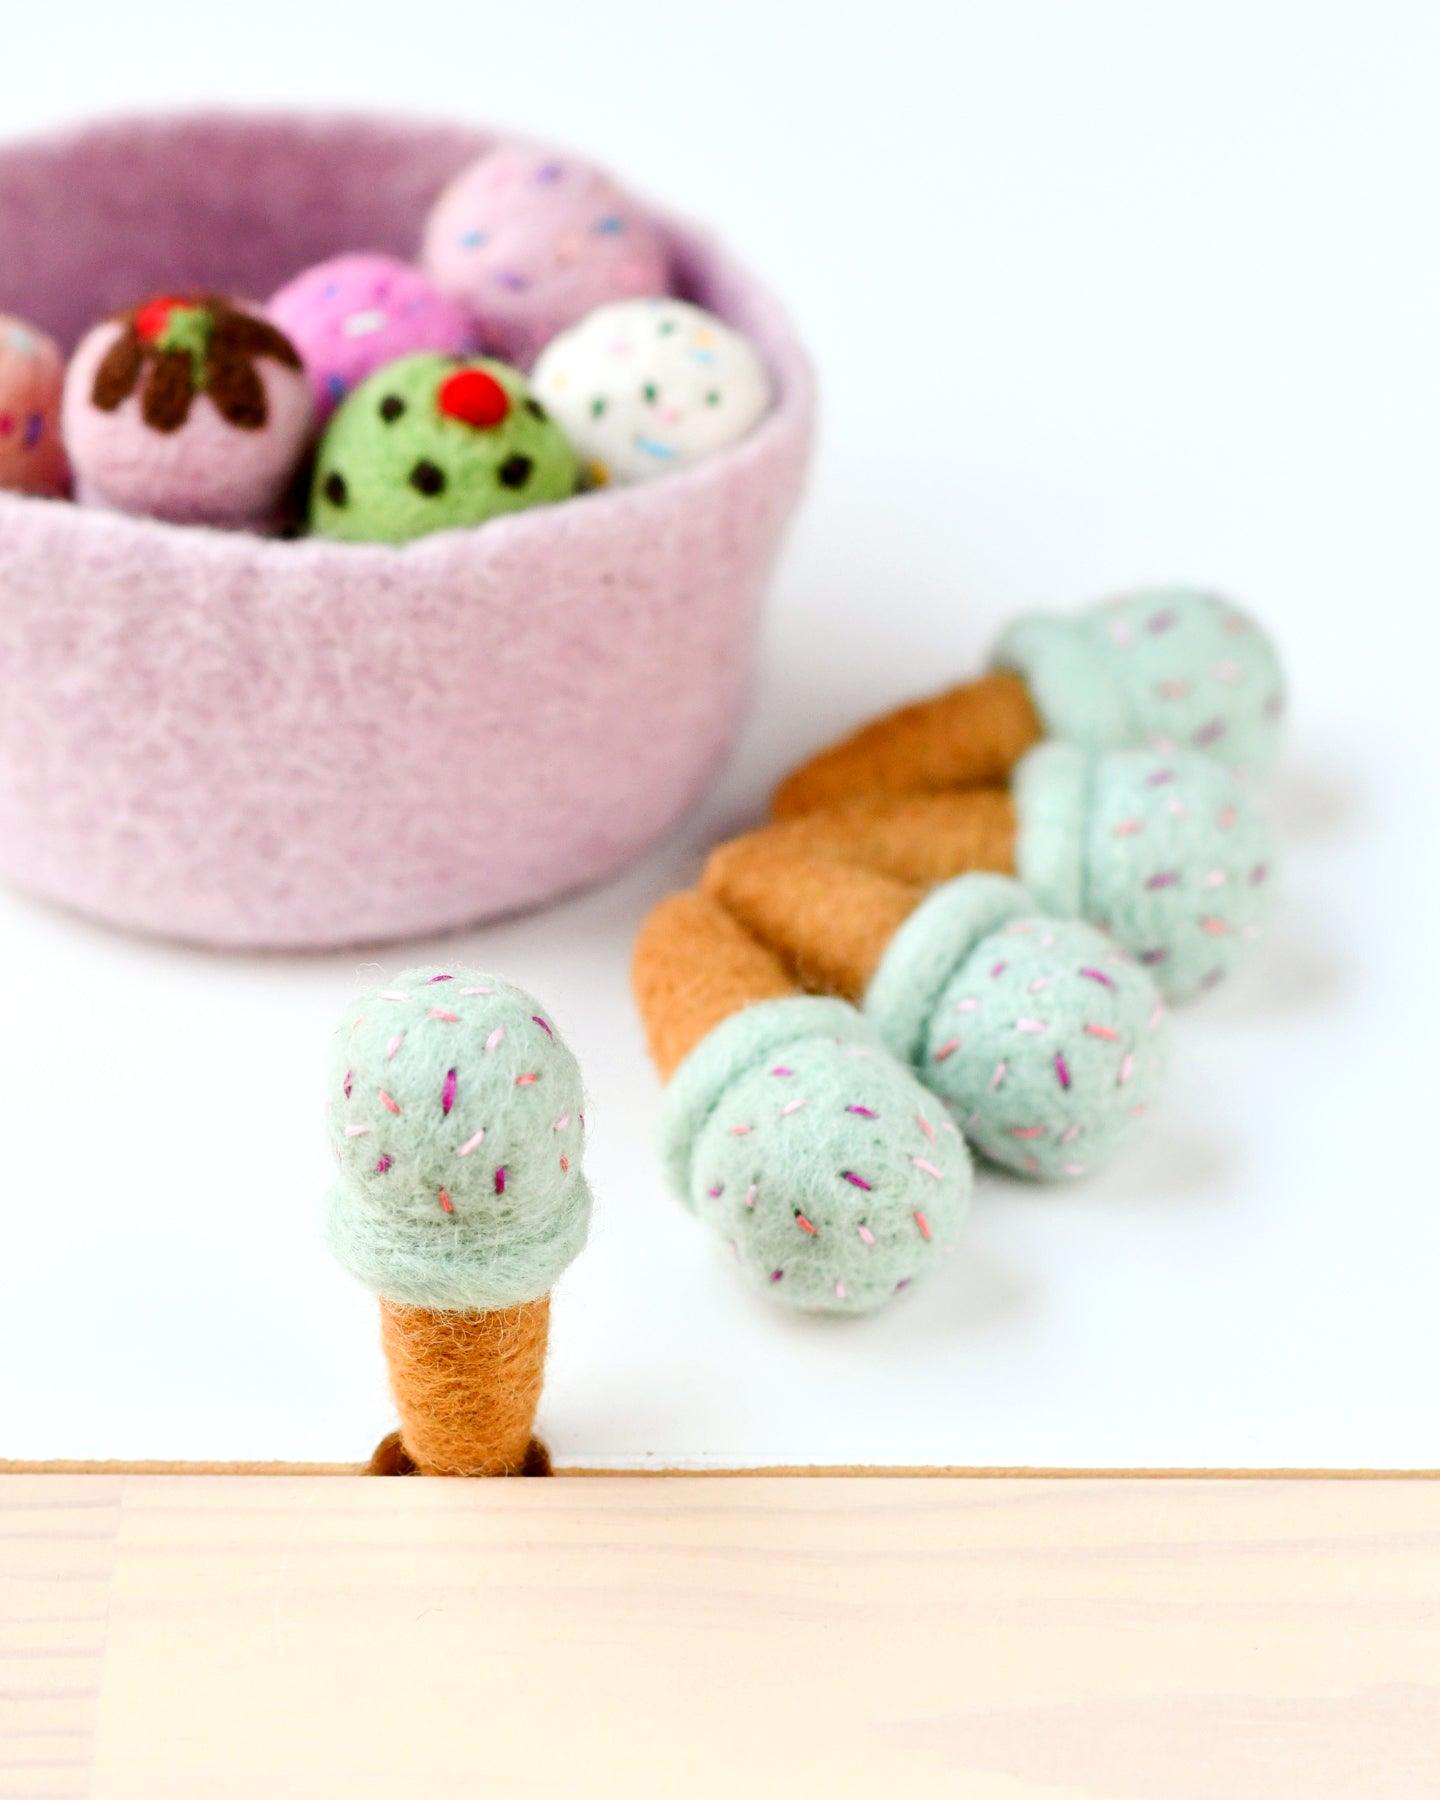 Felt Ice Creams - Cotton Candy Flavour with Sprinkles - Tara Treasures